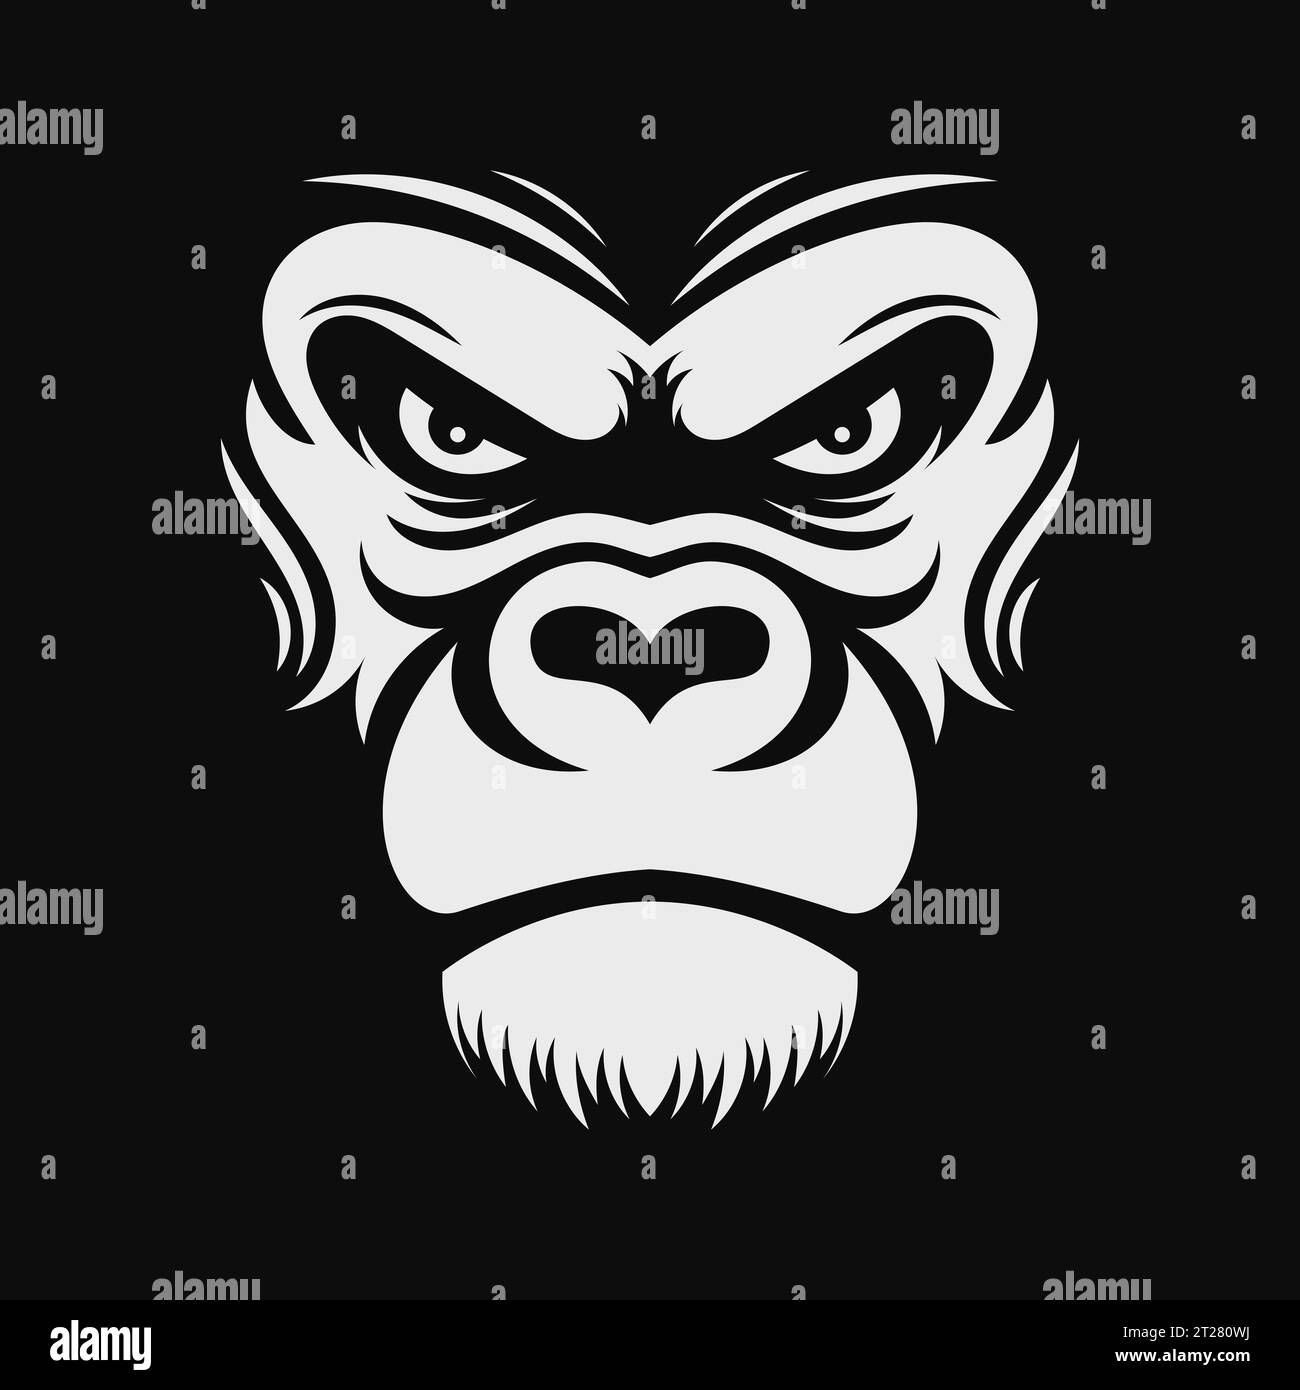 https://c8.alamy.com/comp/2T280WJ/angry-gorilla-head-black-and-white-logo-vector-illustration-eps10-2T280WJ.jpg